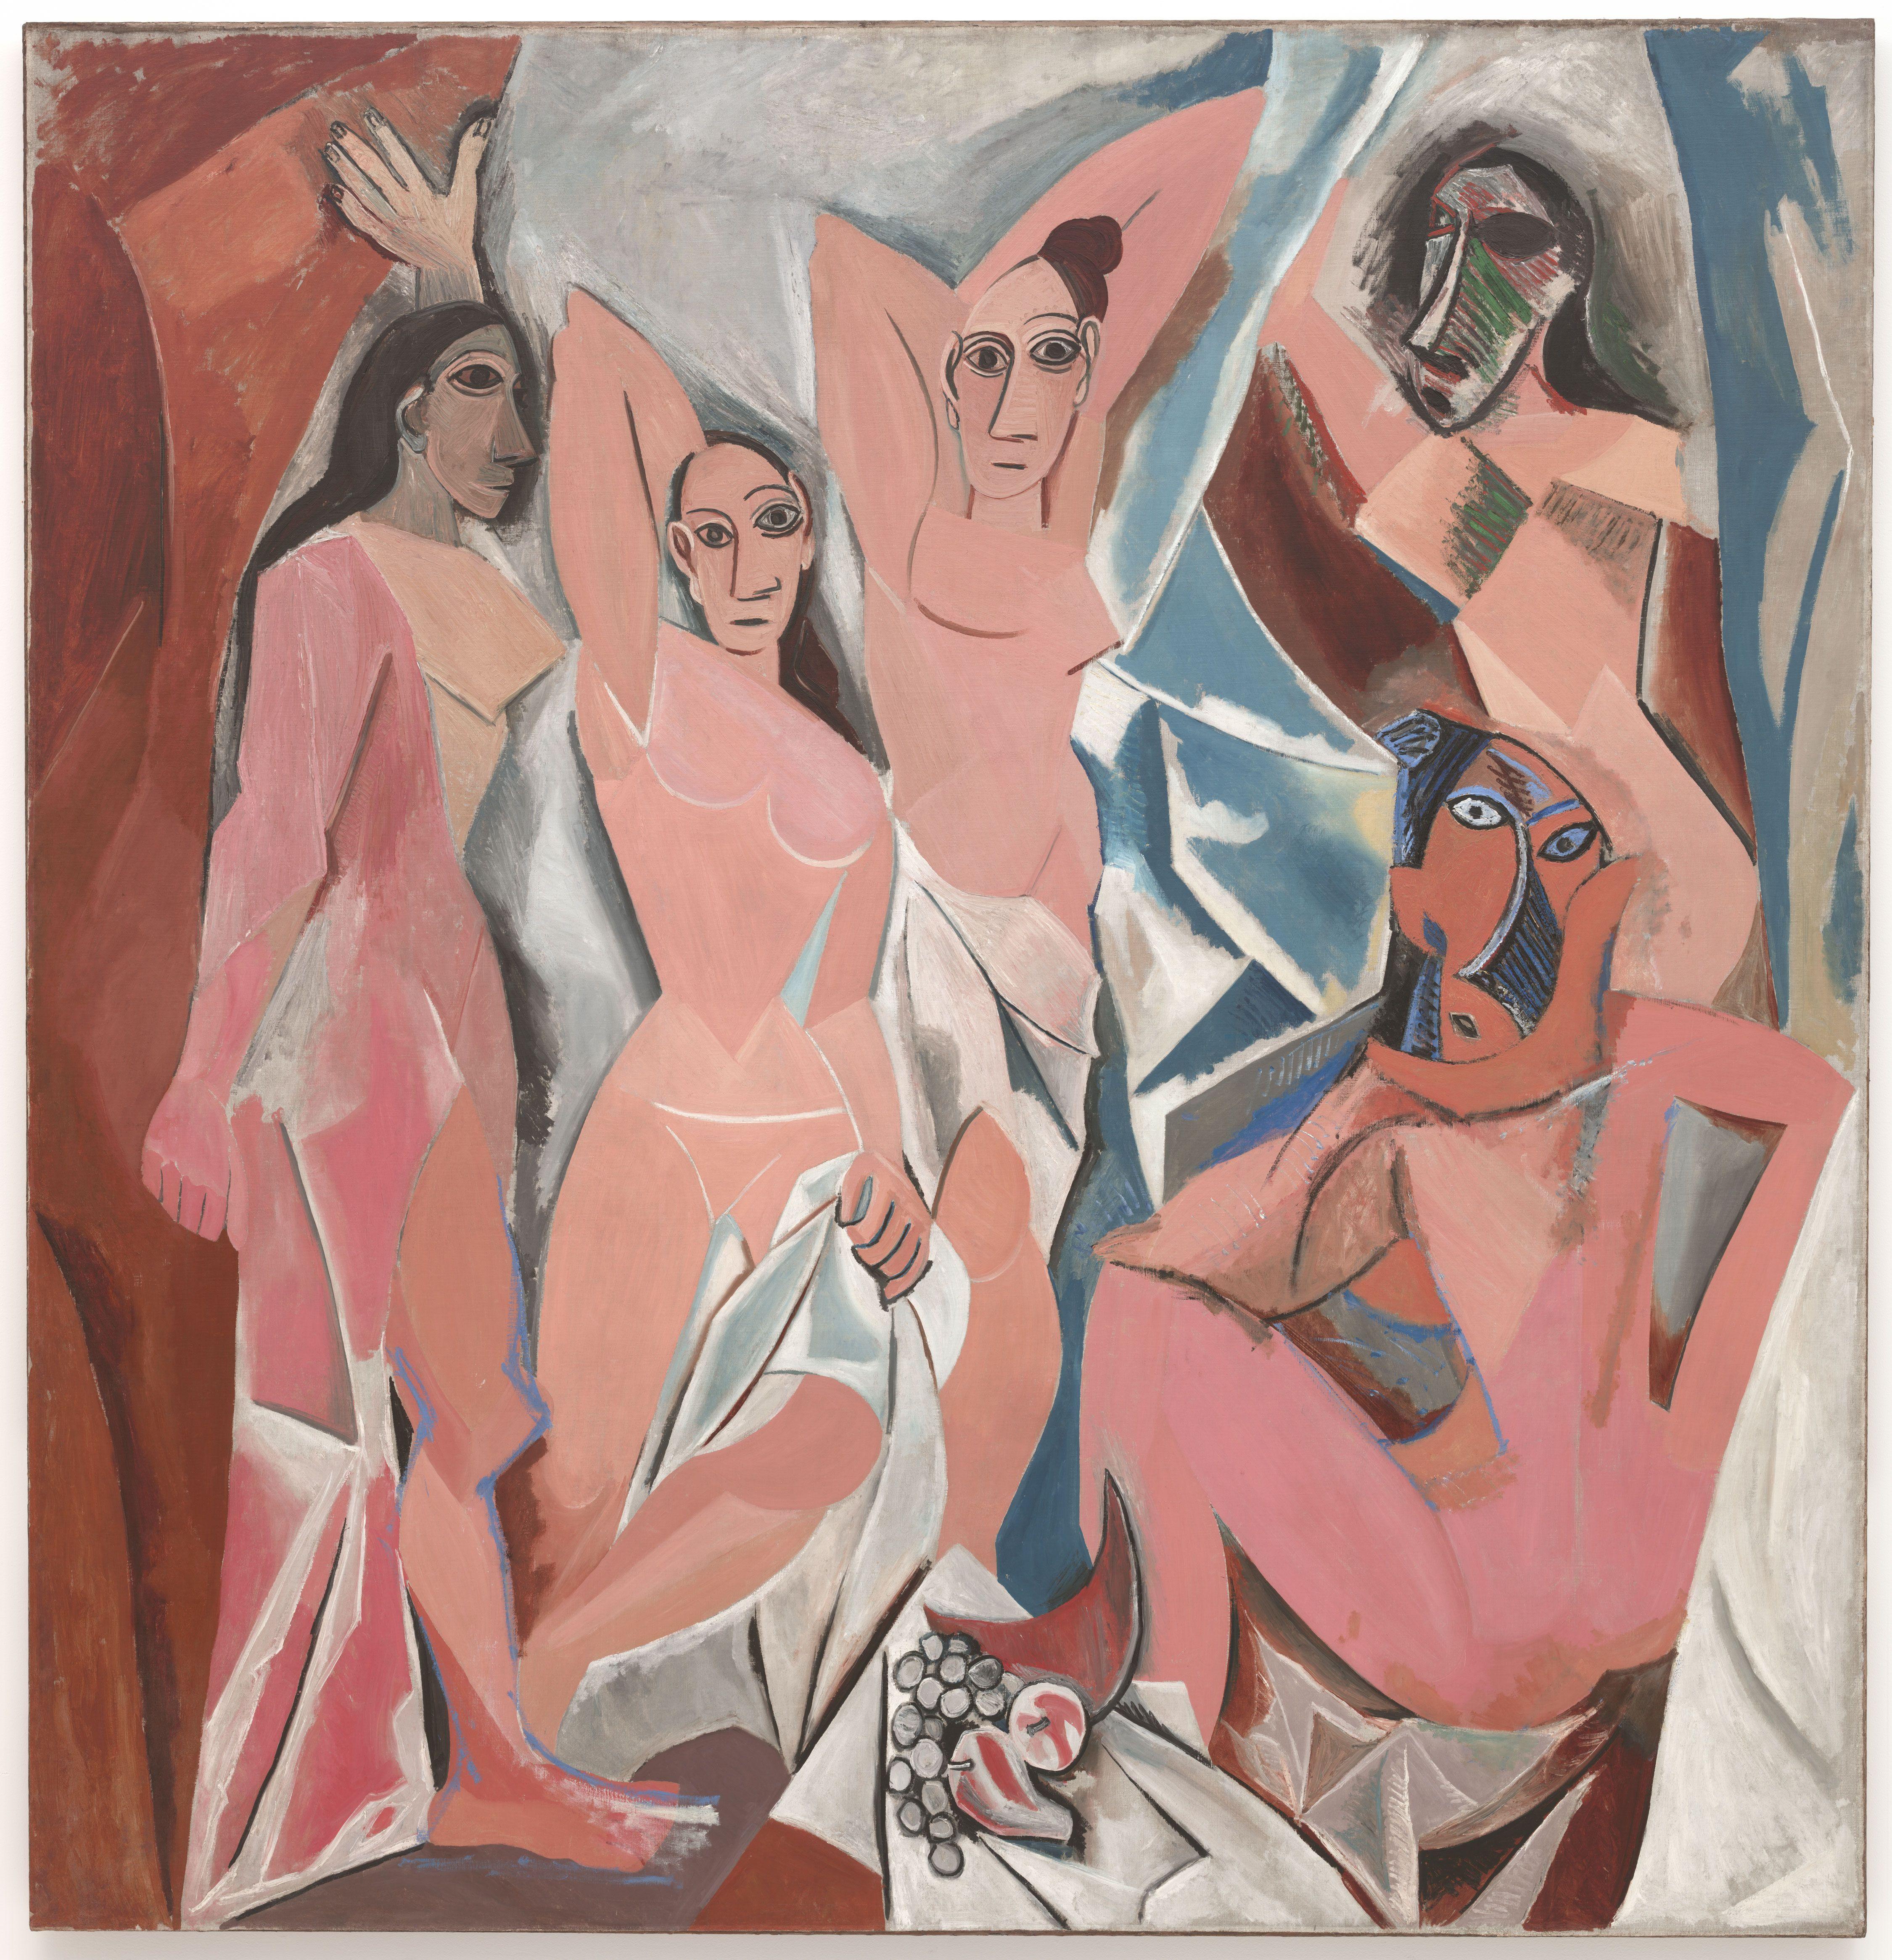 Pablo Picasso, Les Demoiselles d’Avignon, 1907, Museum of Modern Art, New York, NY, USA.